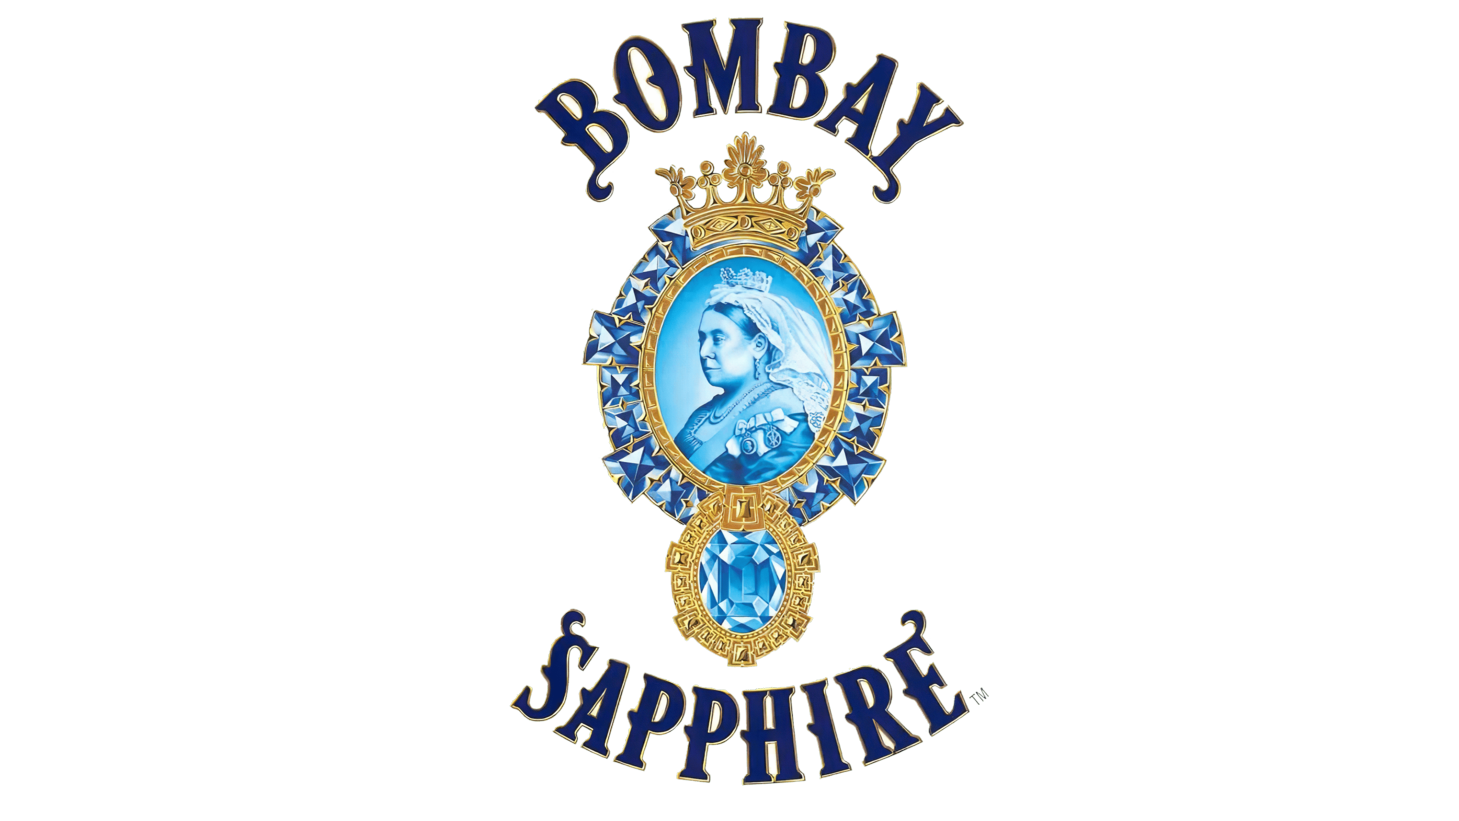 Bombay sapphire sign